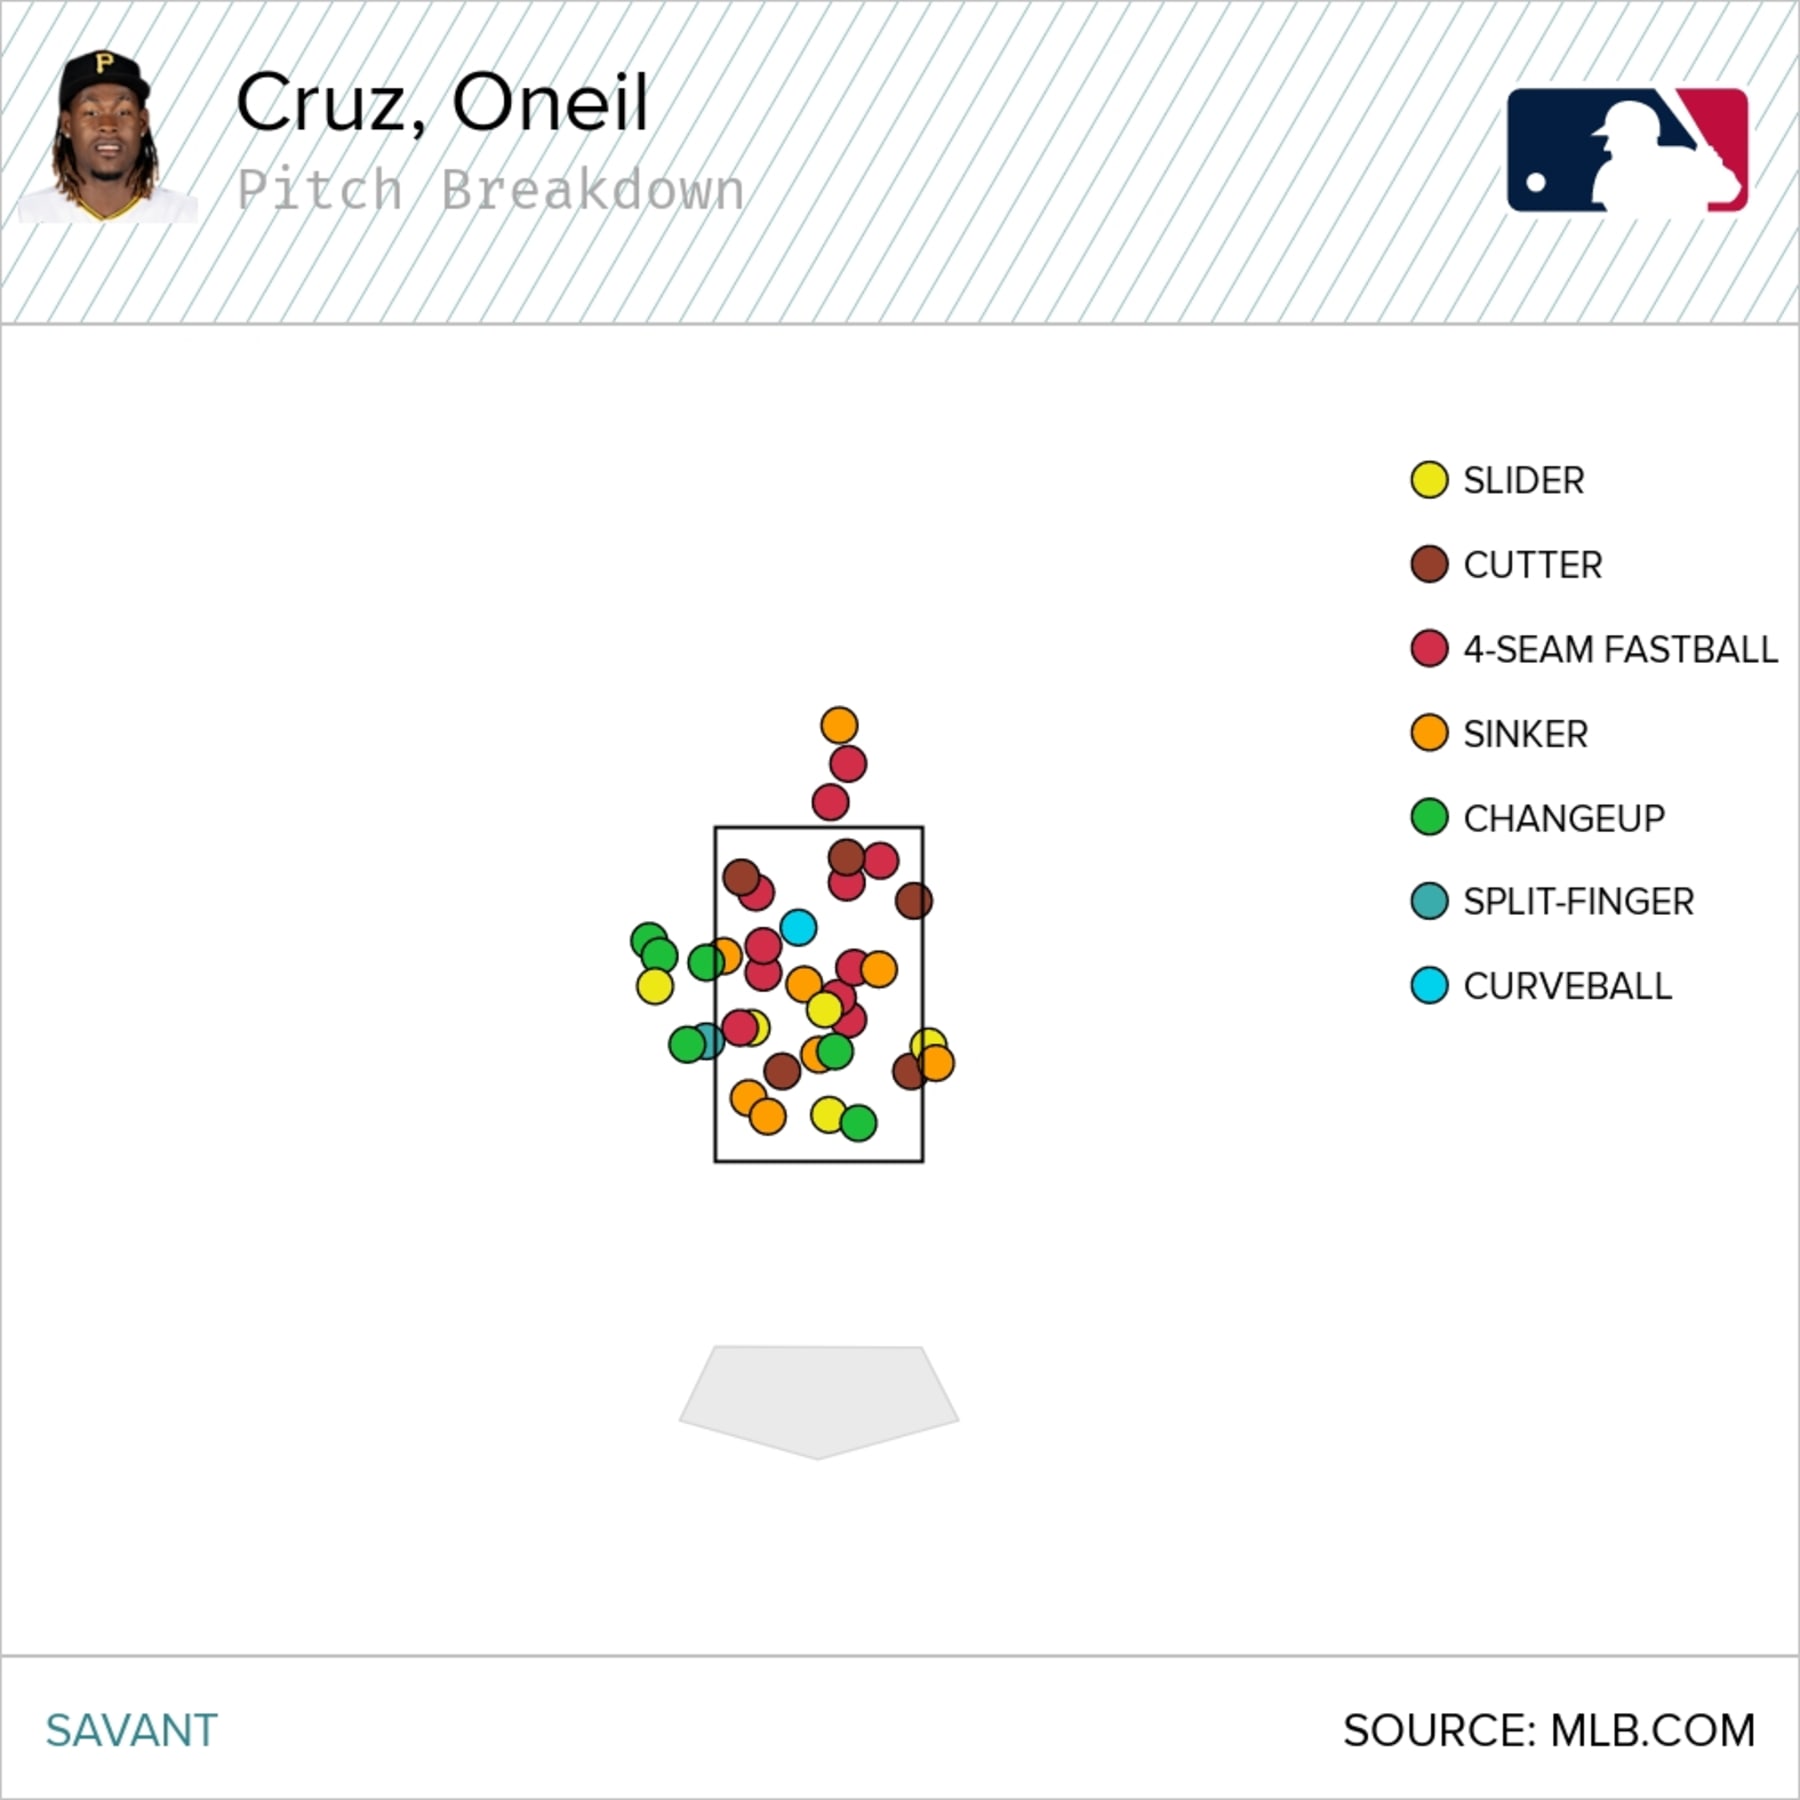 Oneil Cruz being cruz #pirates #rtjr #raseit #mlb #baseball